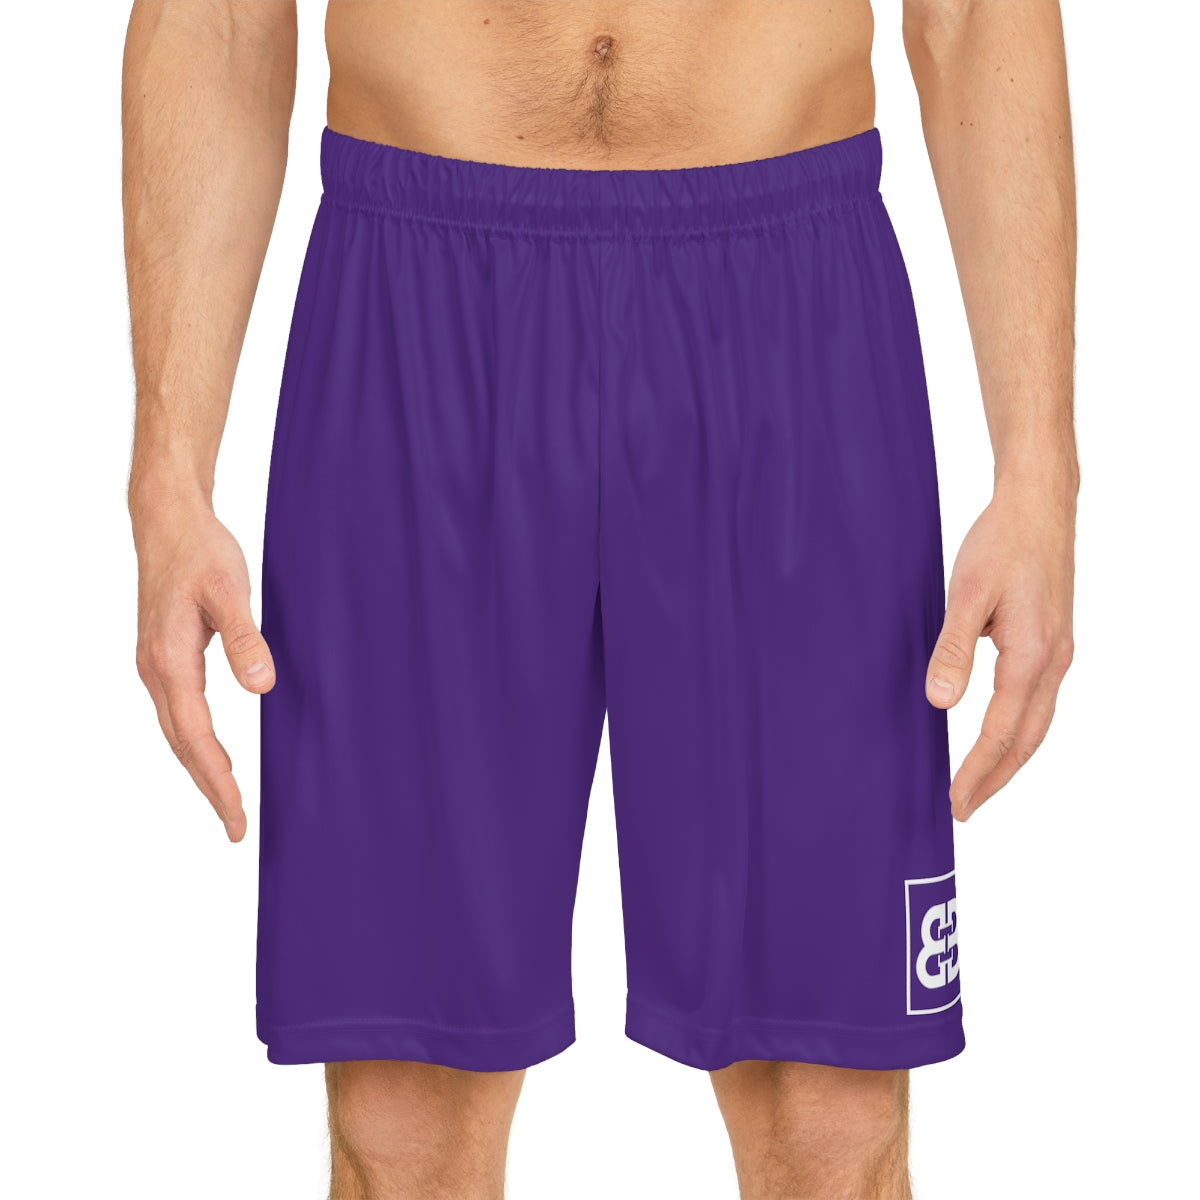 Battle Box BB Purple Basketball Shorts